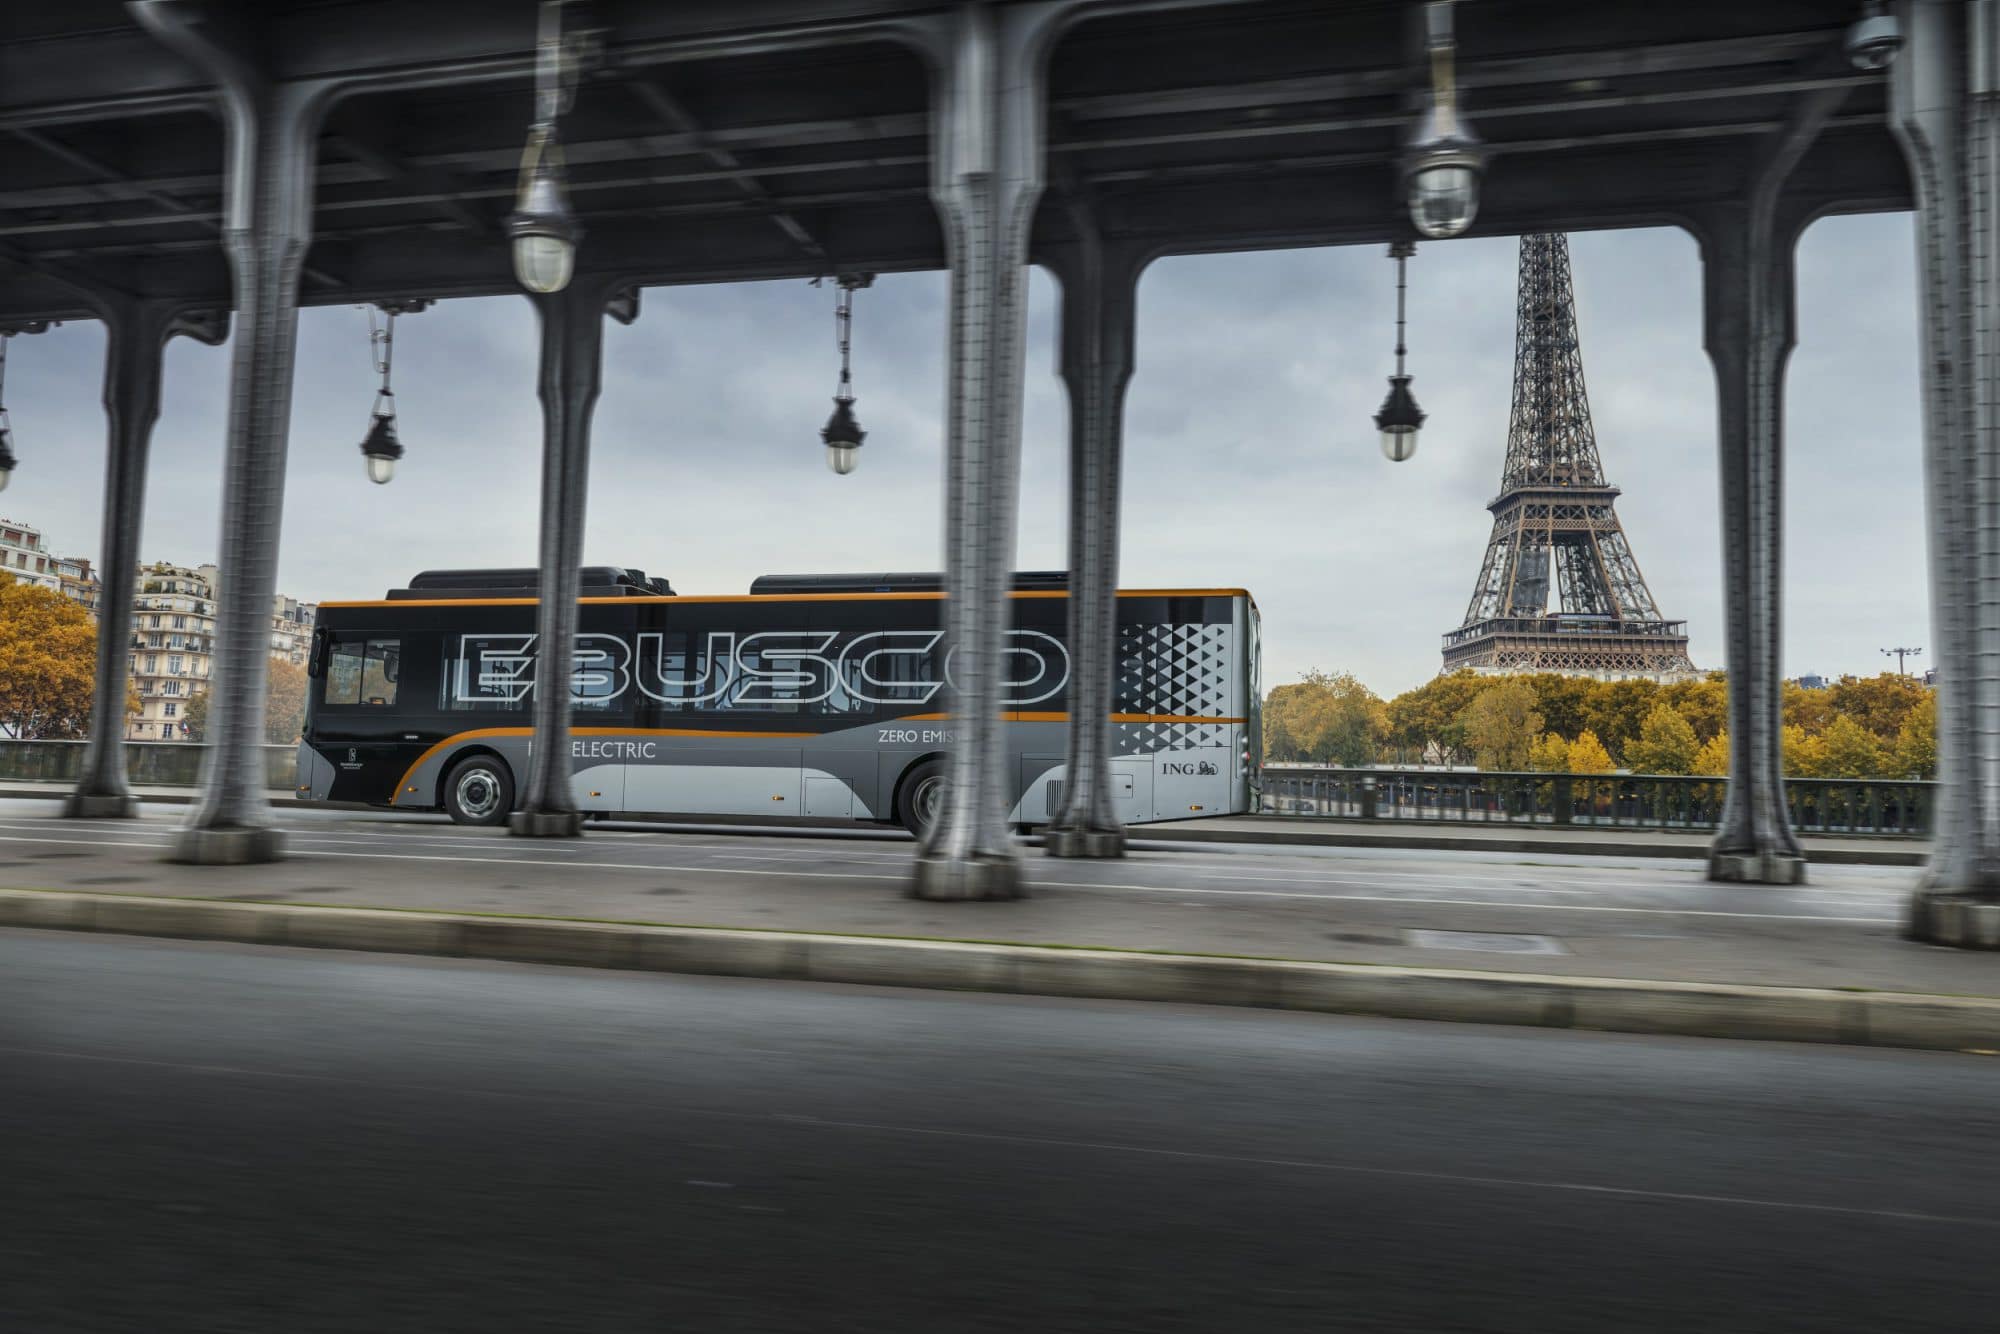 Ebusco bus in Paris with Eiffel Tower